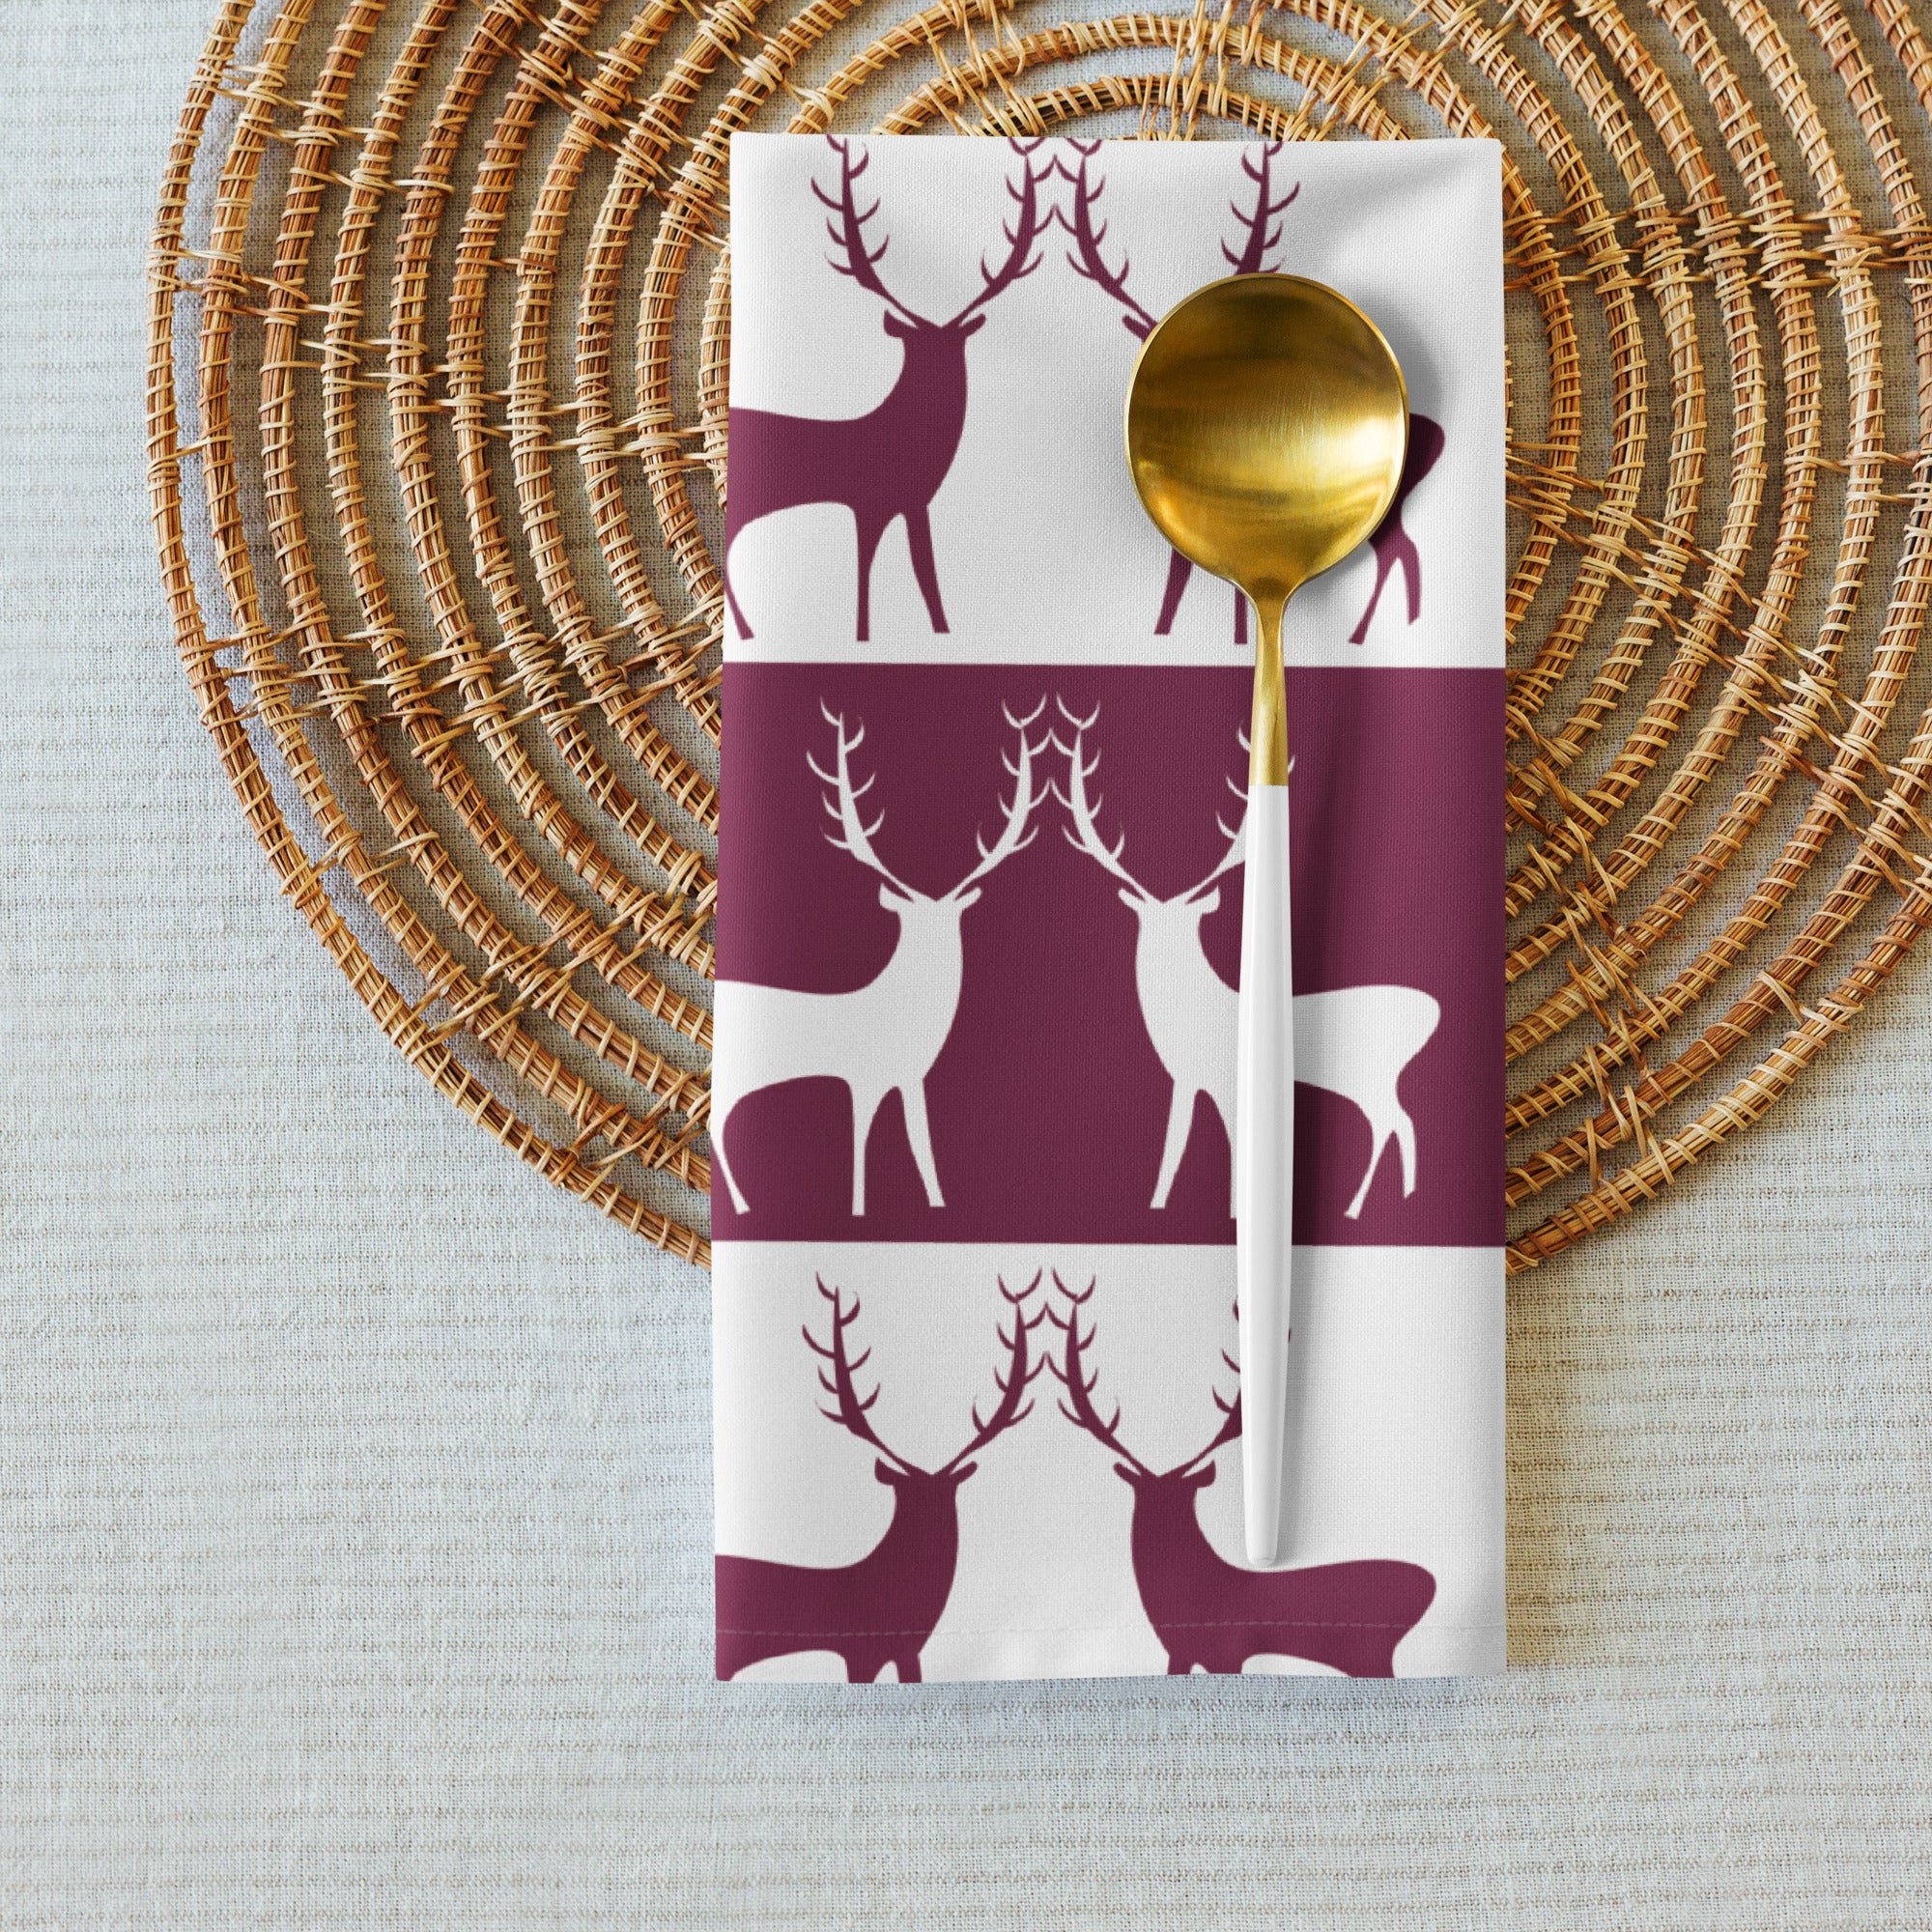 Reindeer | Cloth napkin set